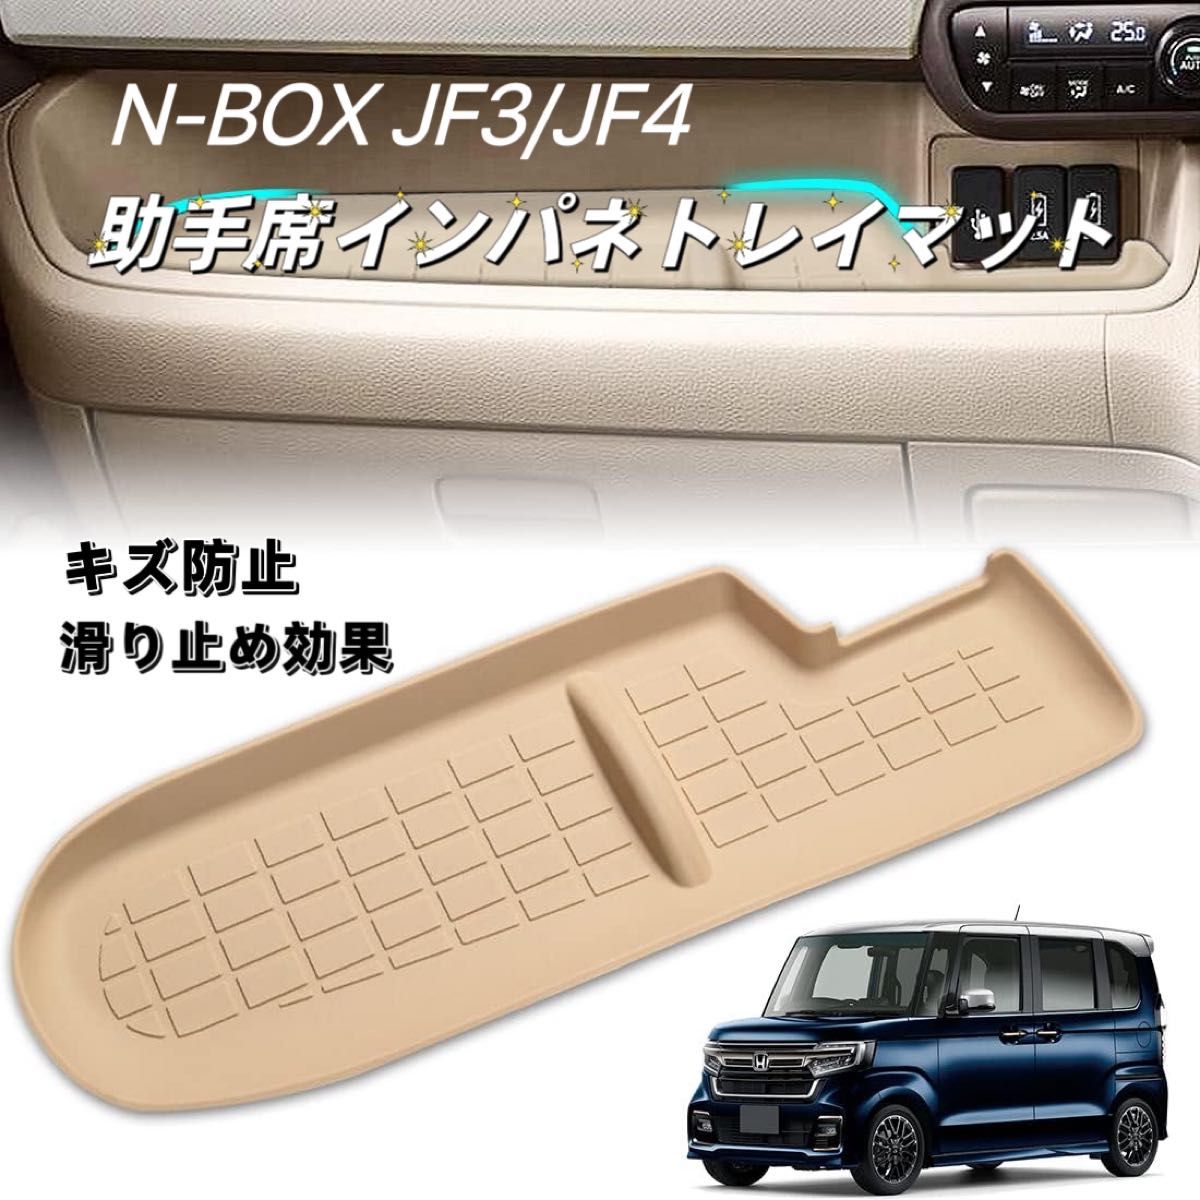 NBOX エヌボックス  JF3 JF4 車用 インパネトレイマット N-BOX nbox 助手席側収納トレイ ベージュ